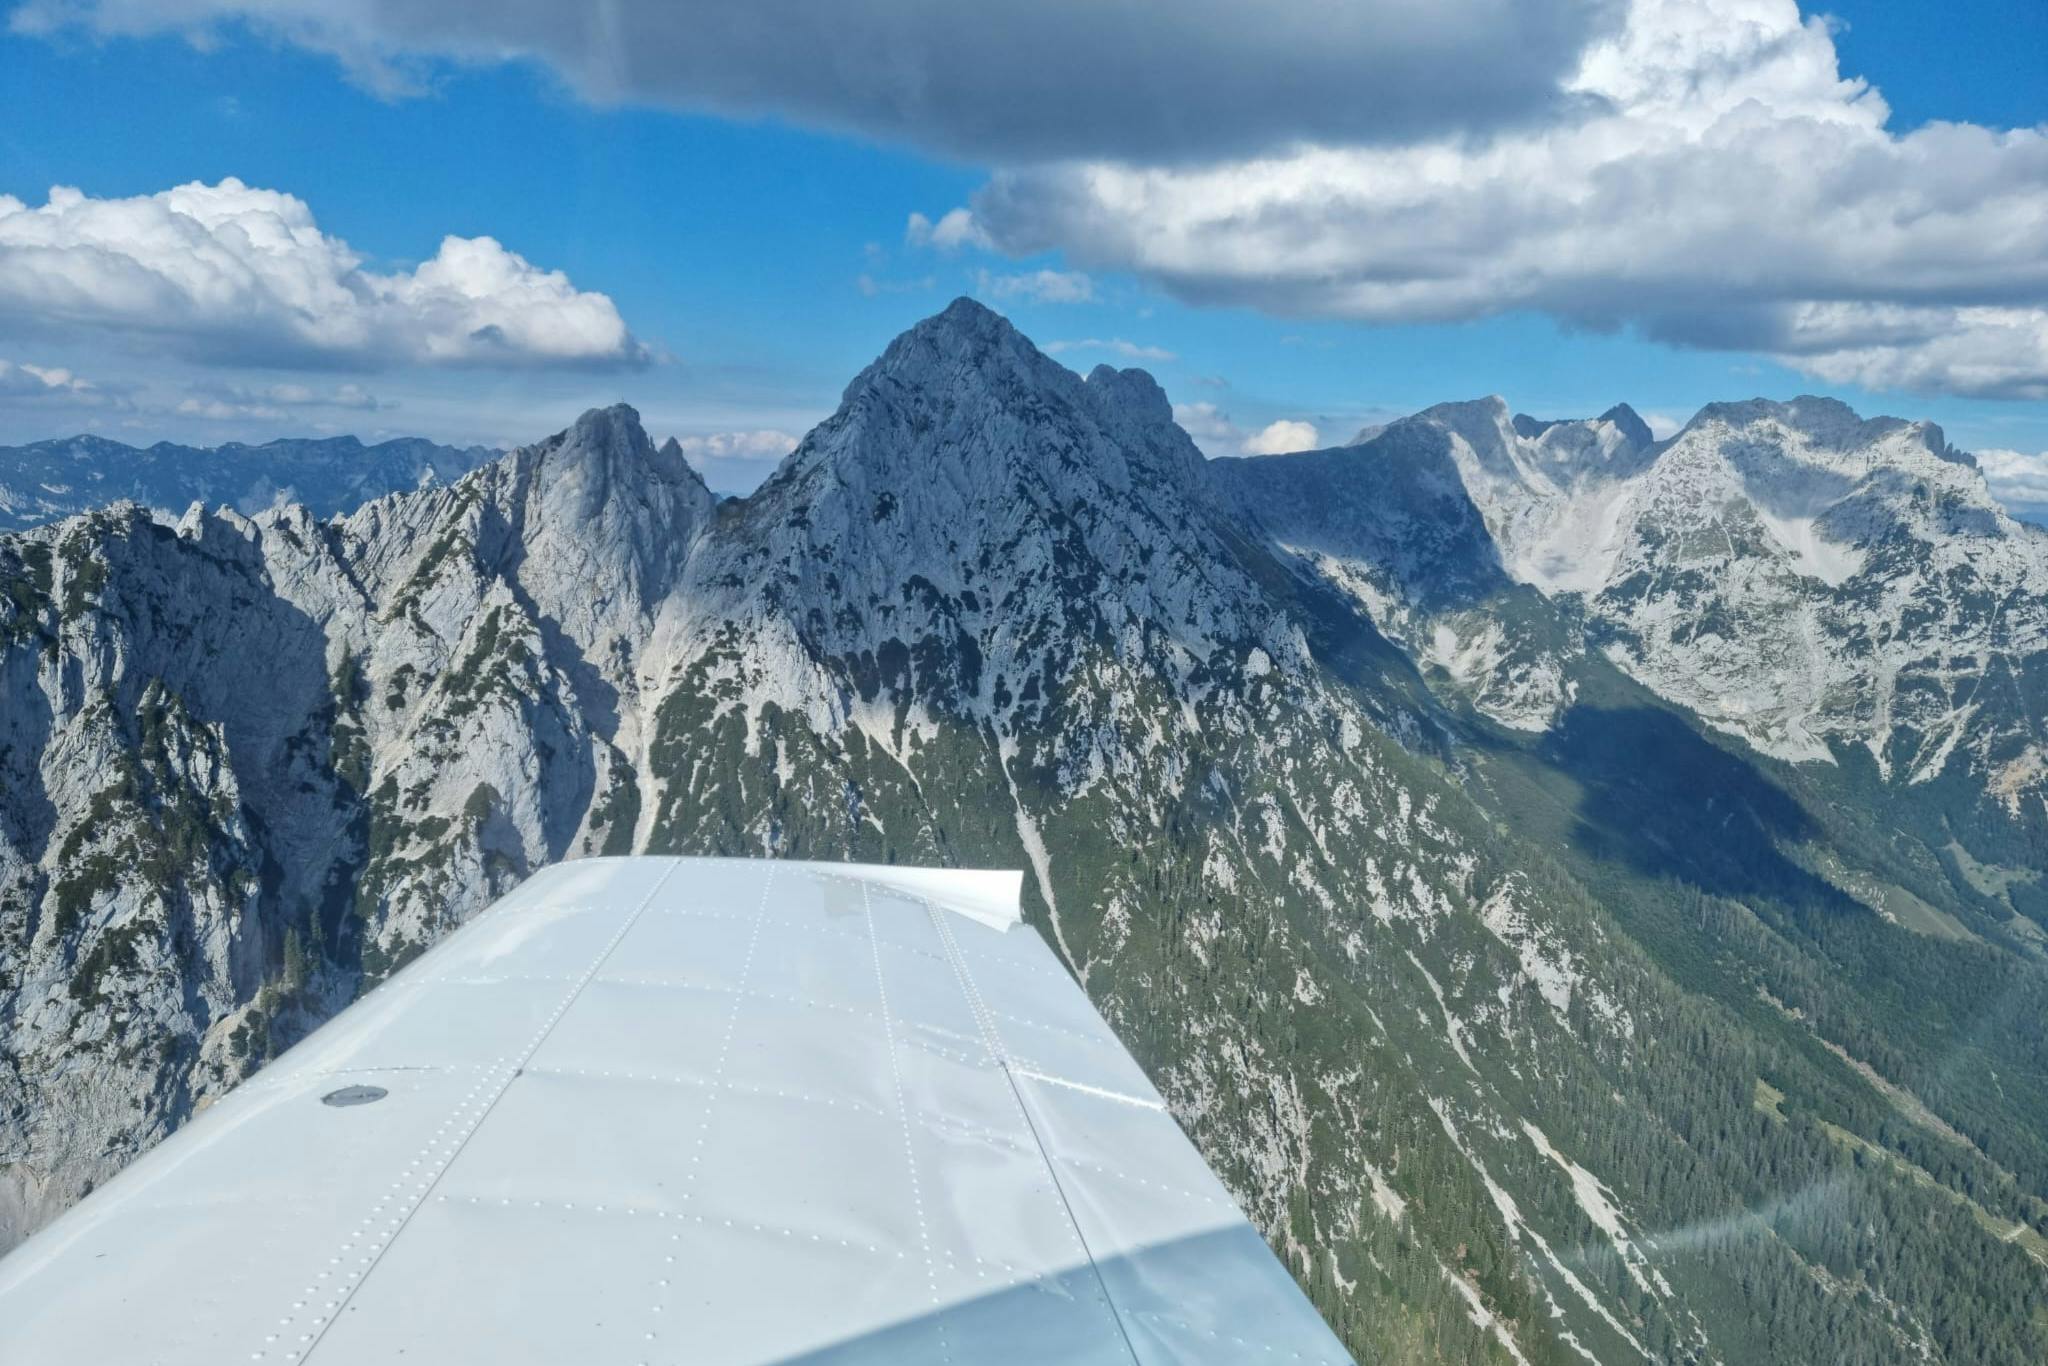 95 Min. Flugzeug Rundflug "Alpen XXL" ab Flugplatz Bad Wörishofen